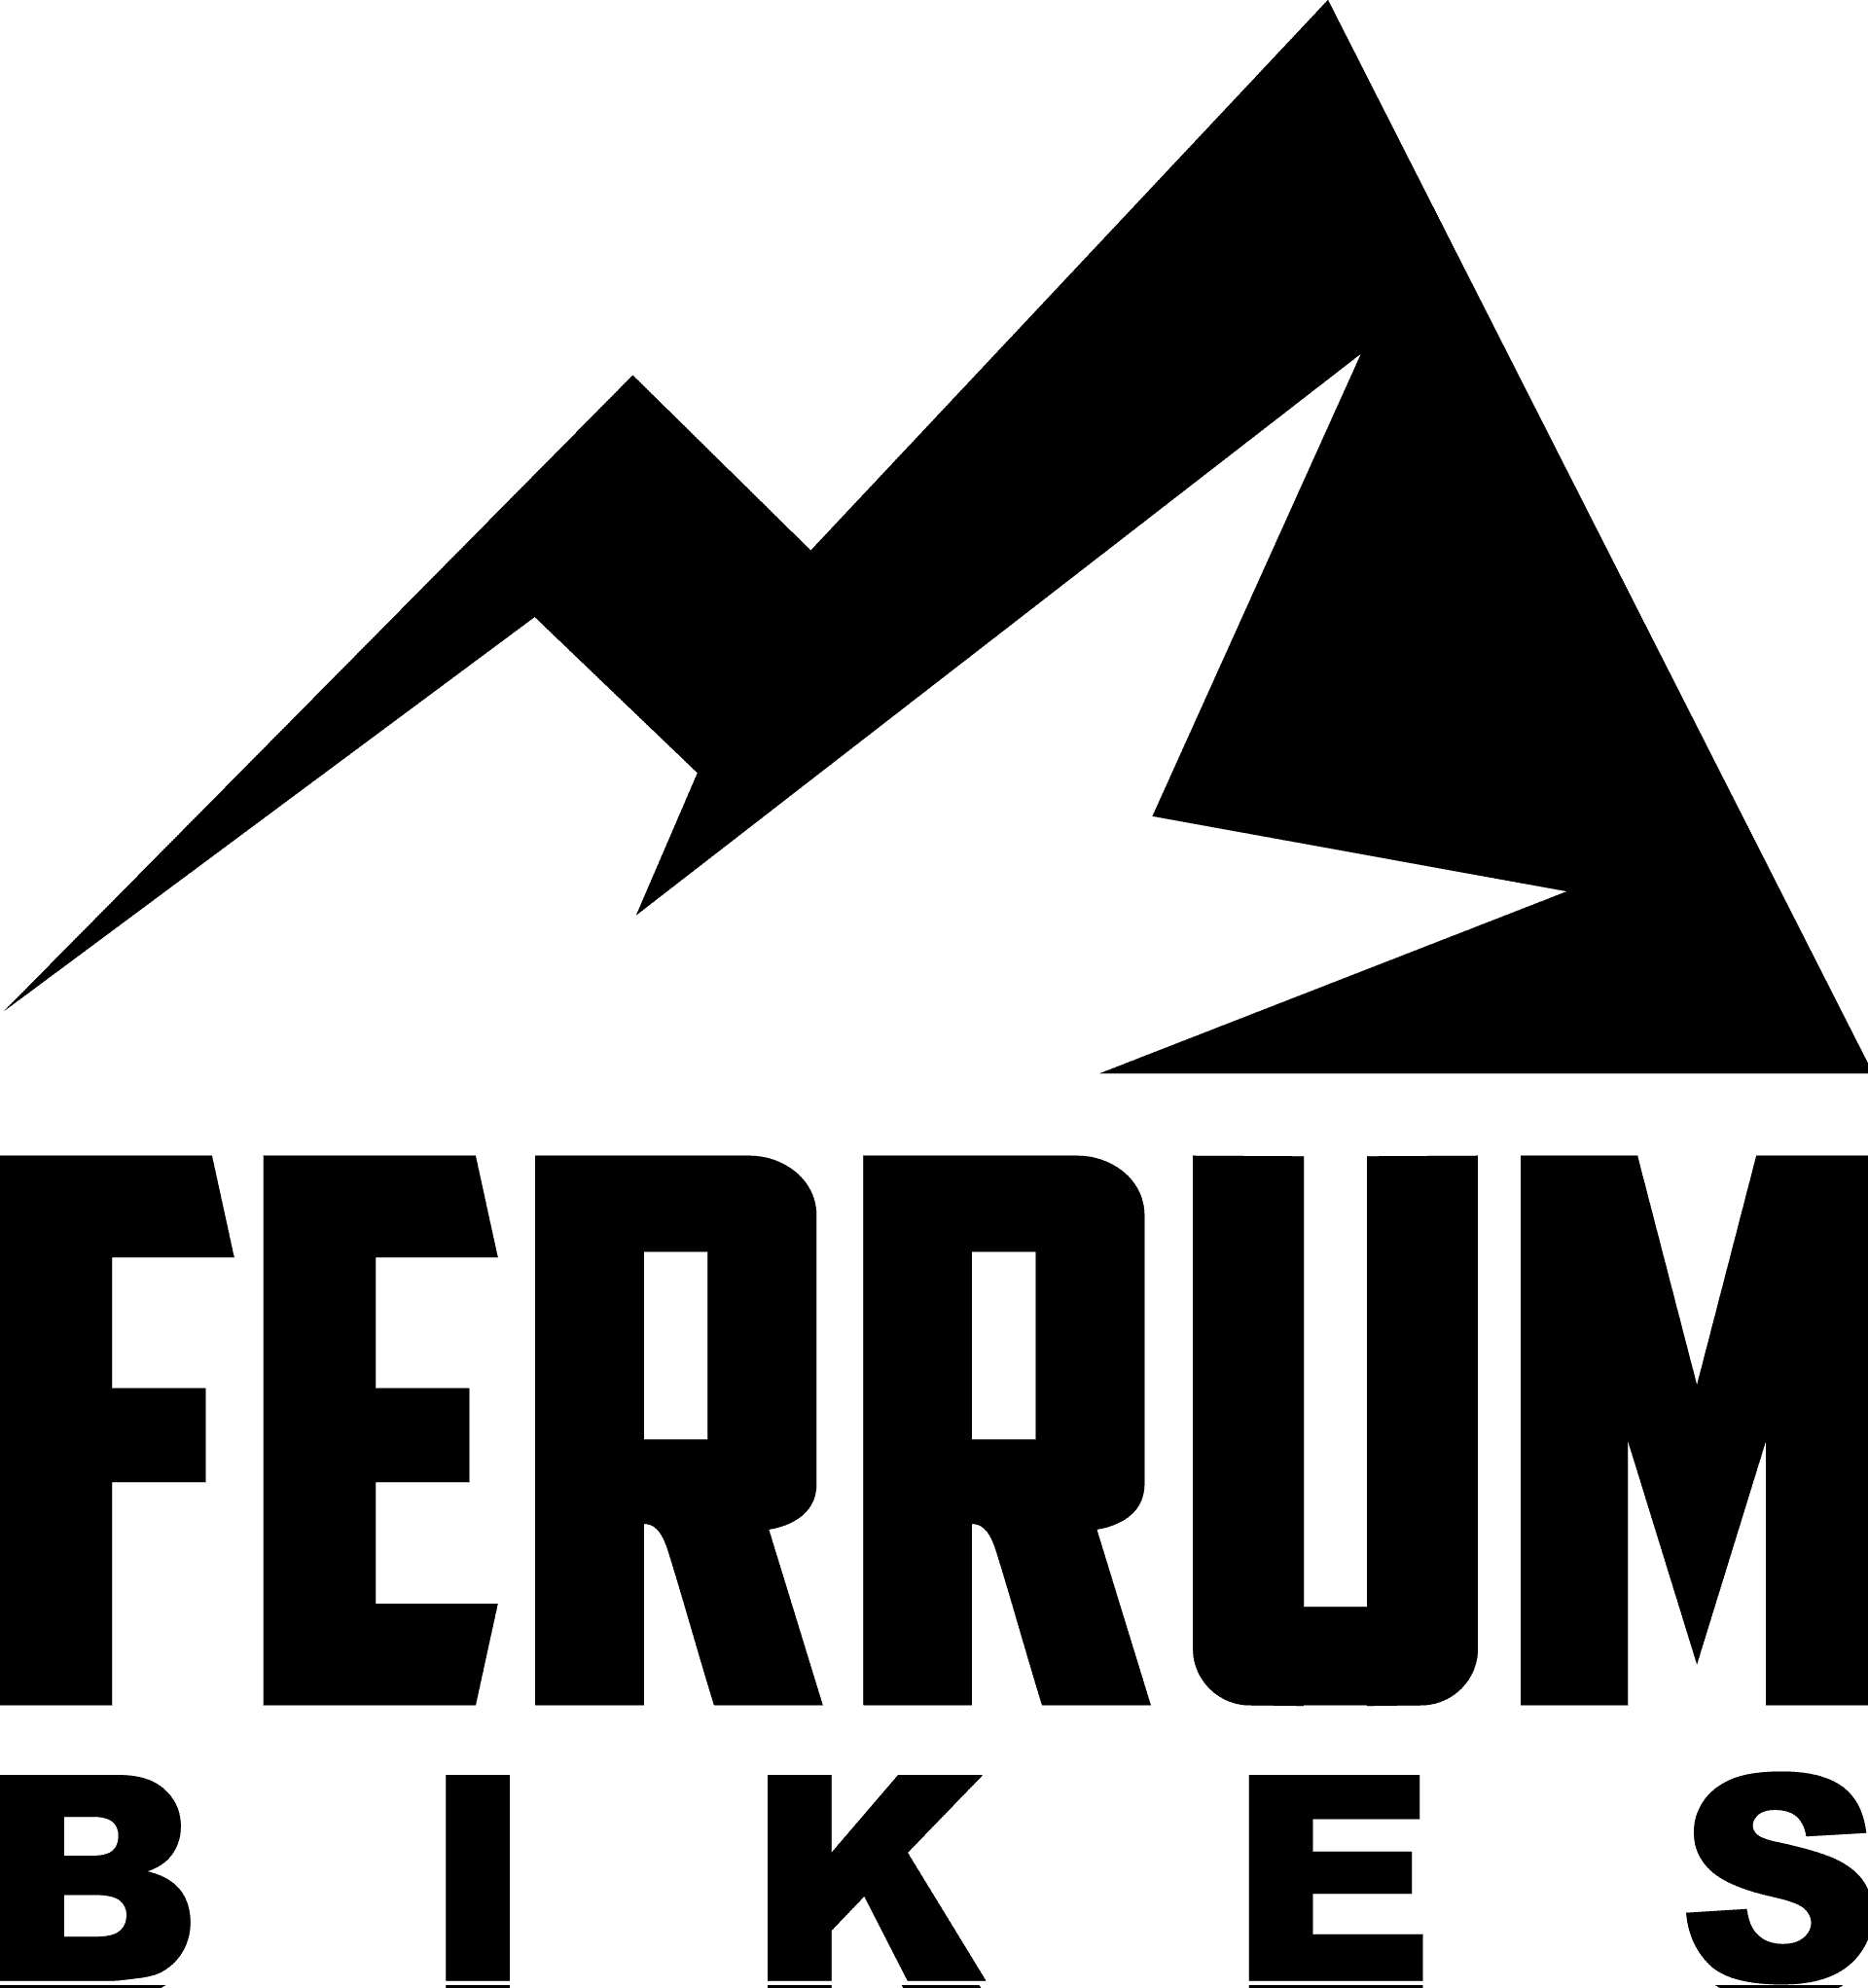 Ferrum Bikes | Chromoly Steel Full Suspension MTB Frames